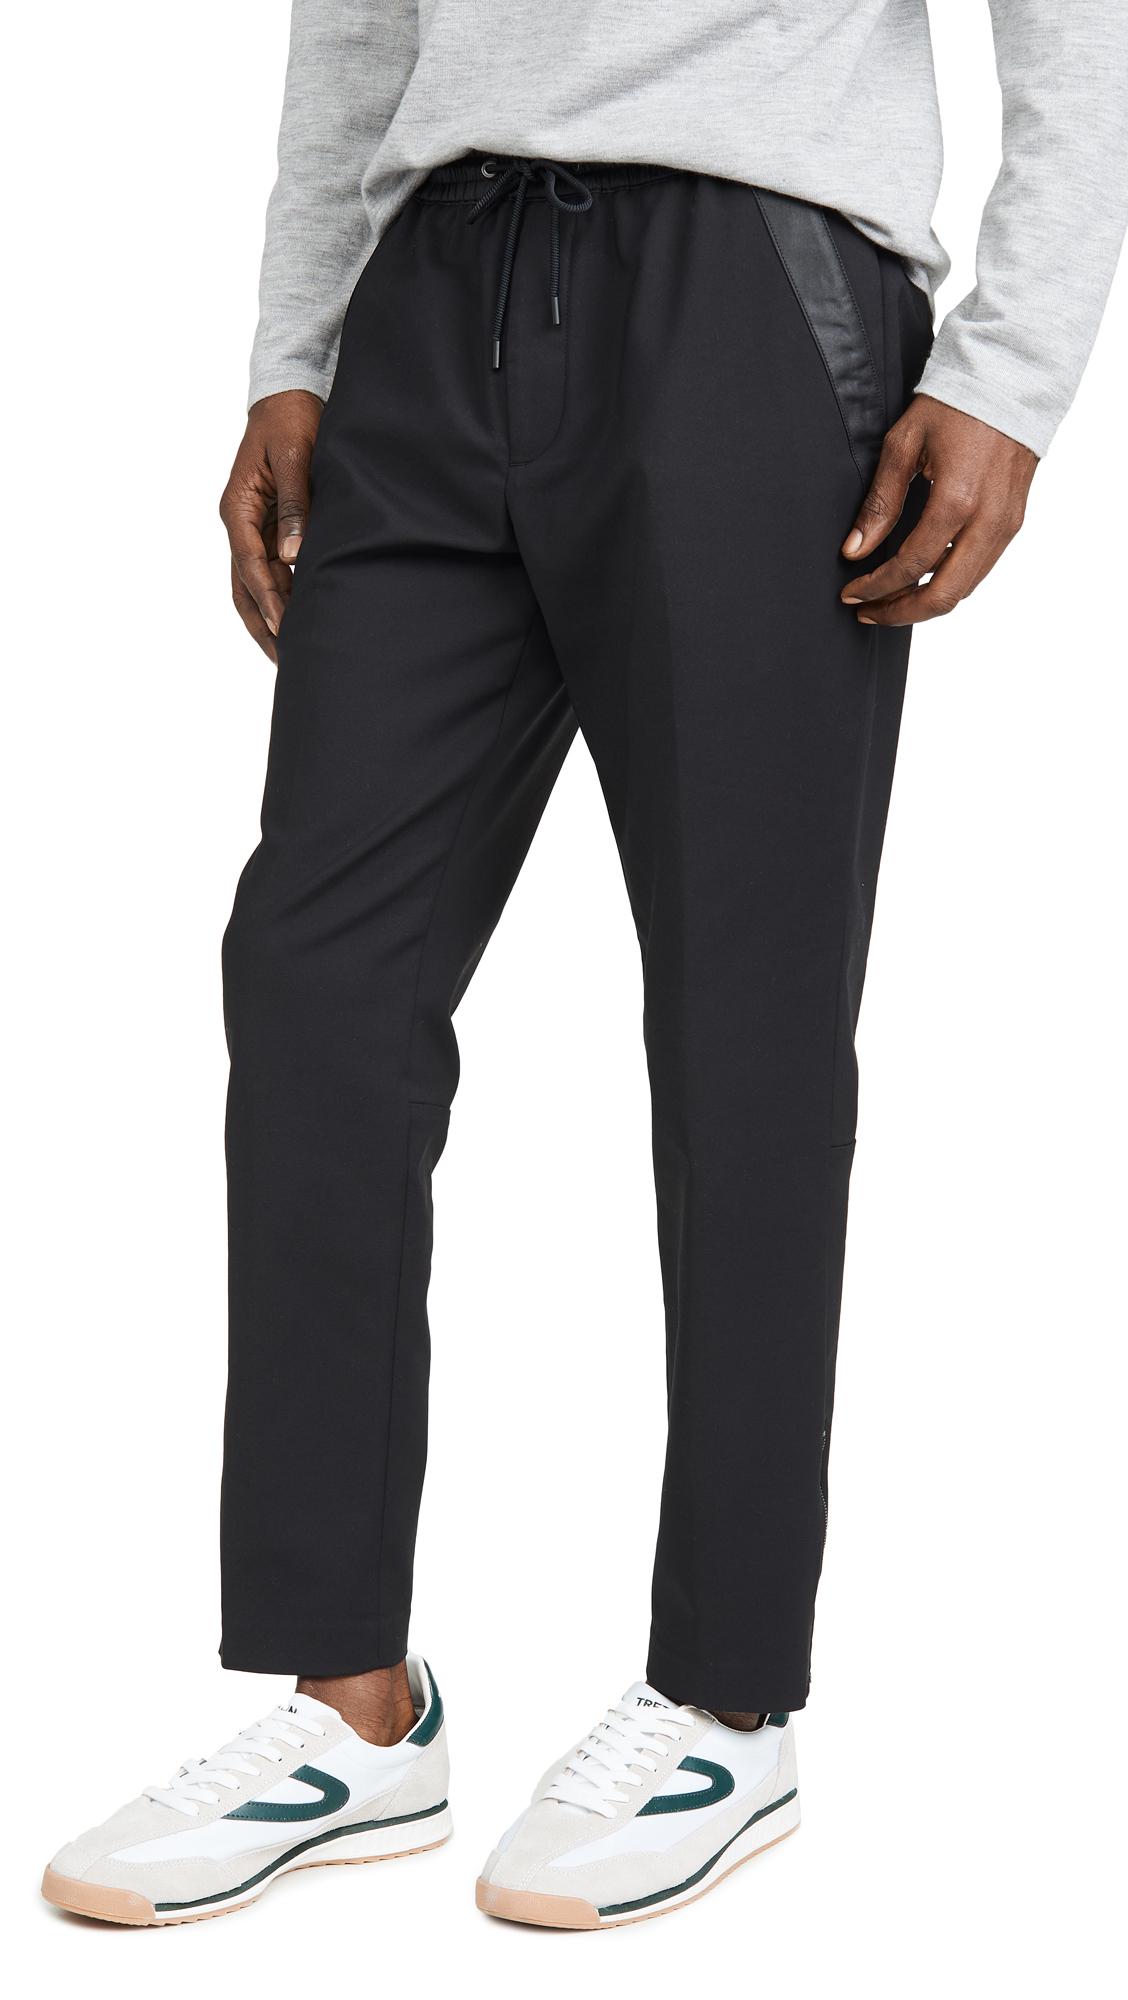 Club Monaco Cotton Travel Pants in Black for Men - Lyst